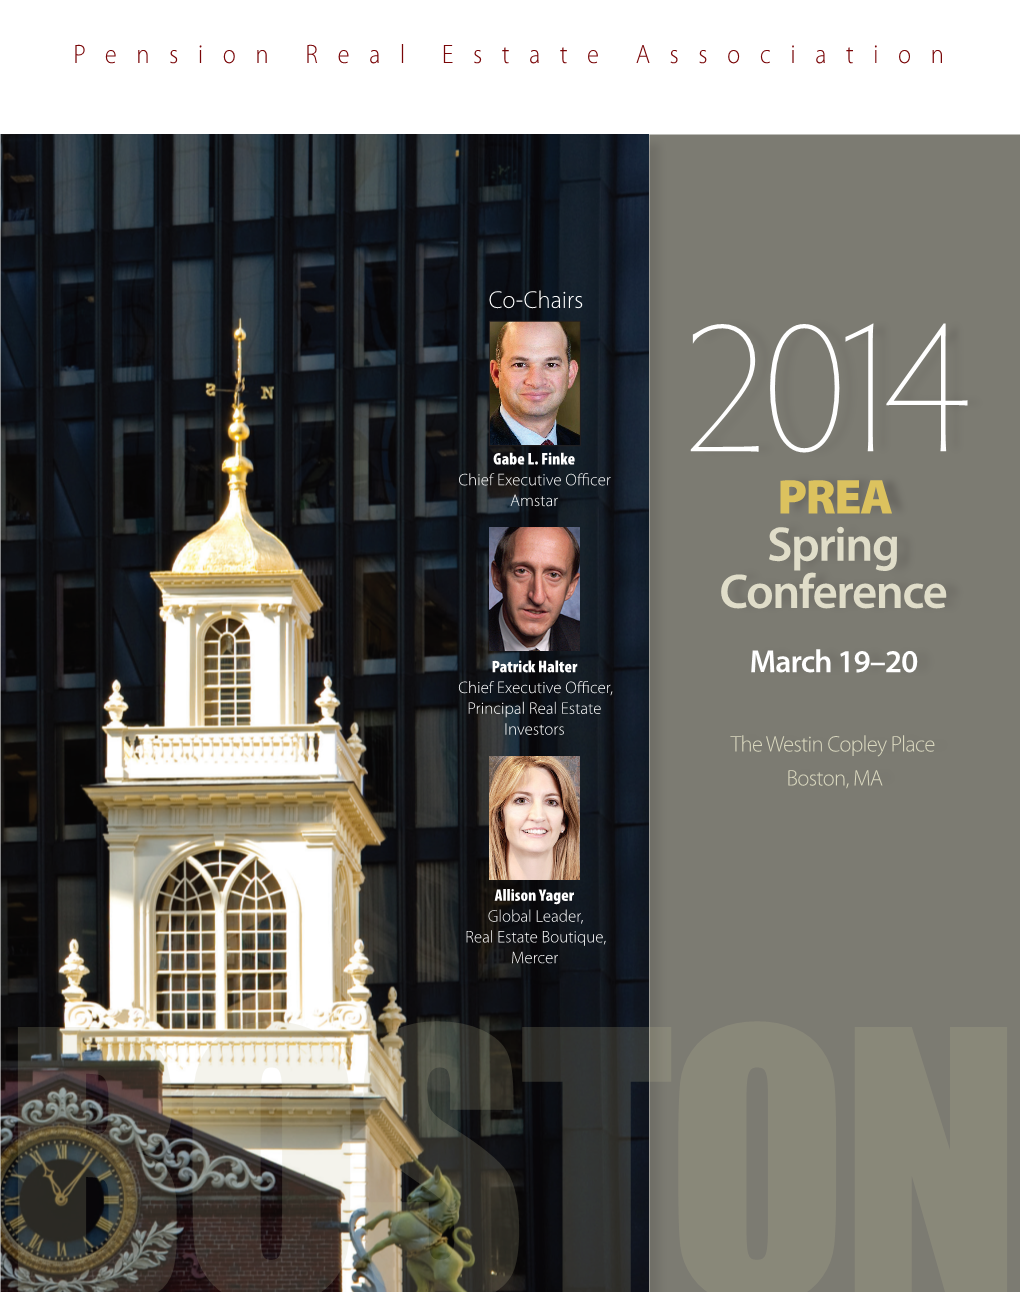 PREA Spring Conference